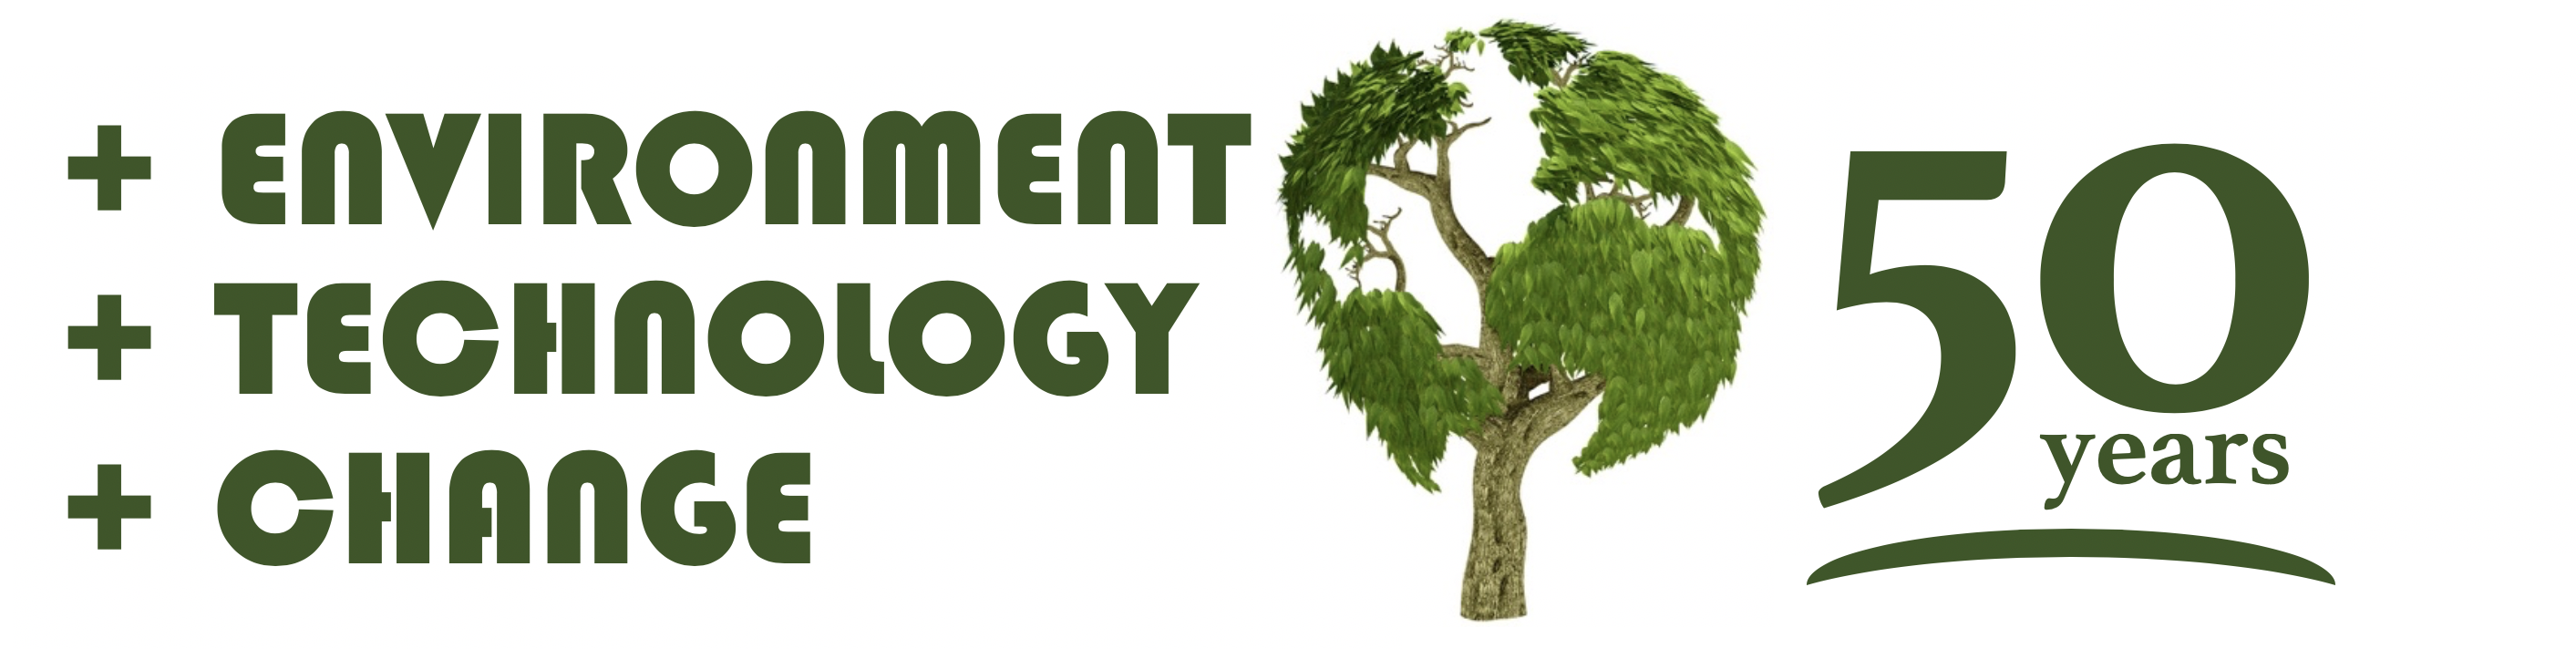 Advanced UK Environment Technology Change Earth Day 2020-1